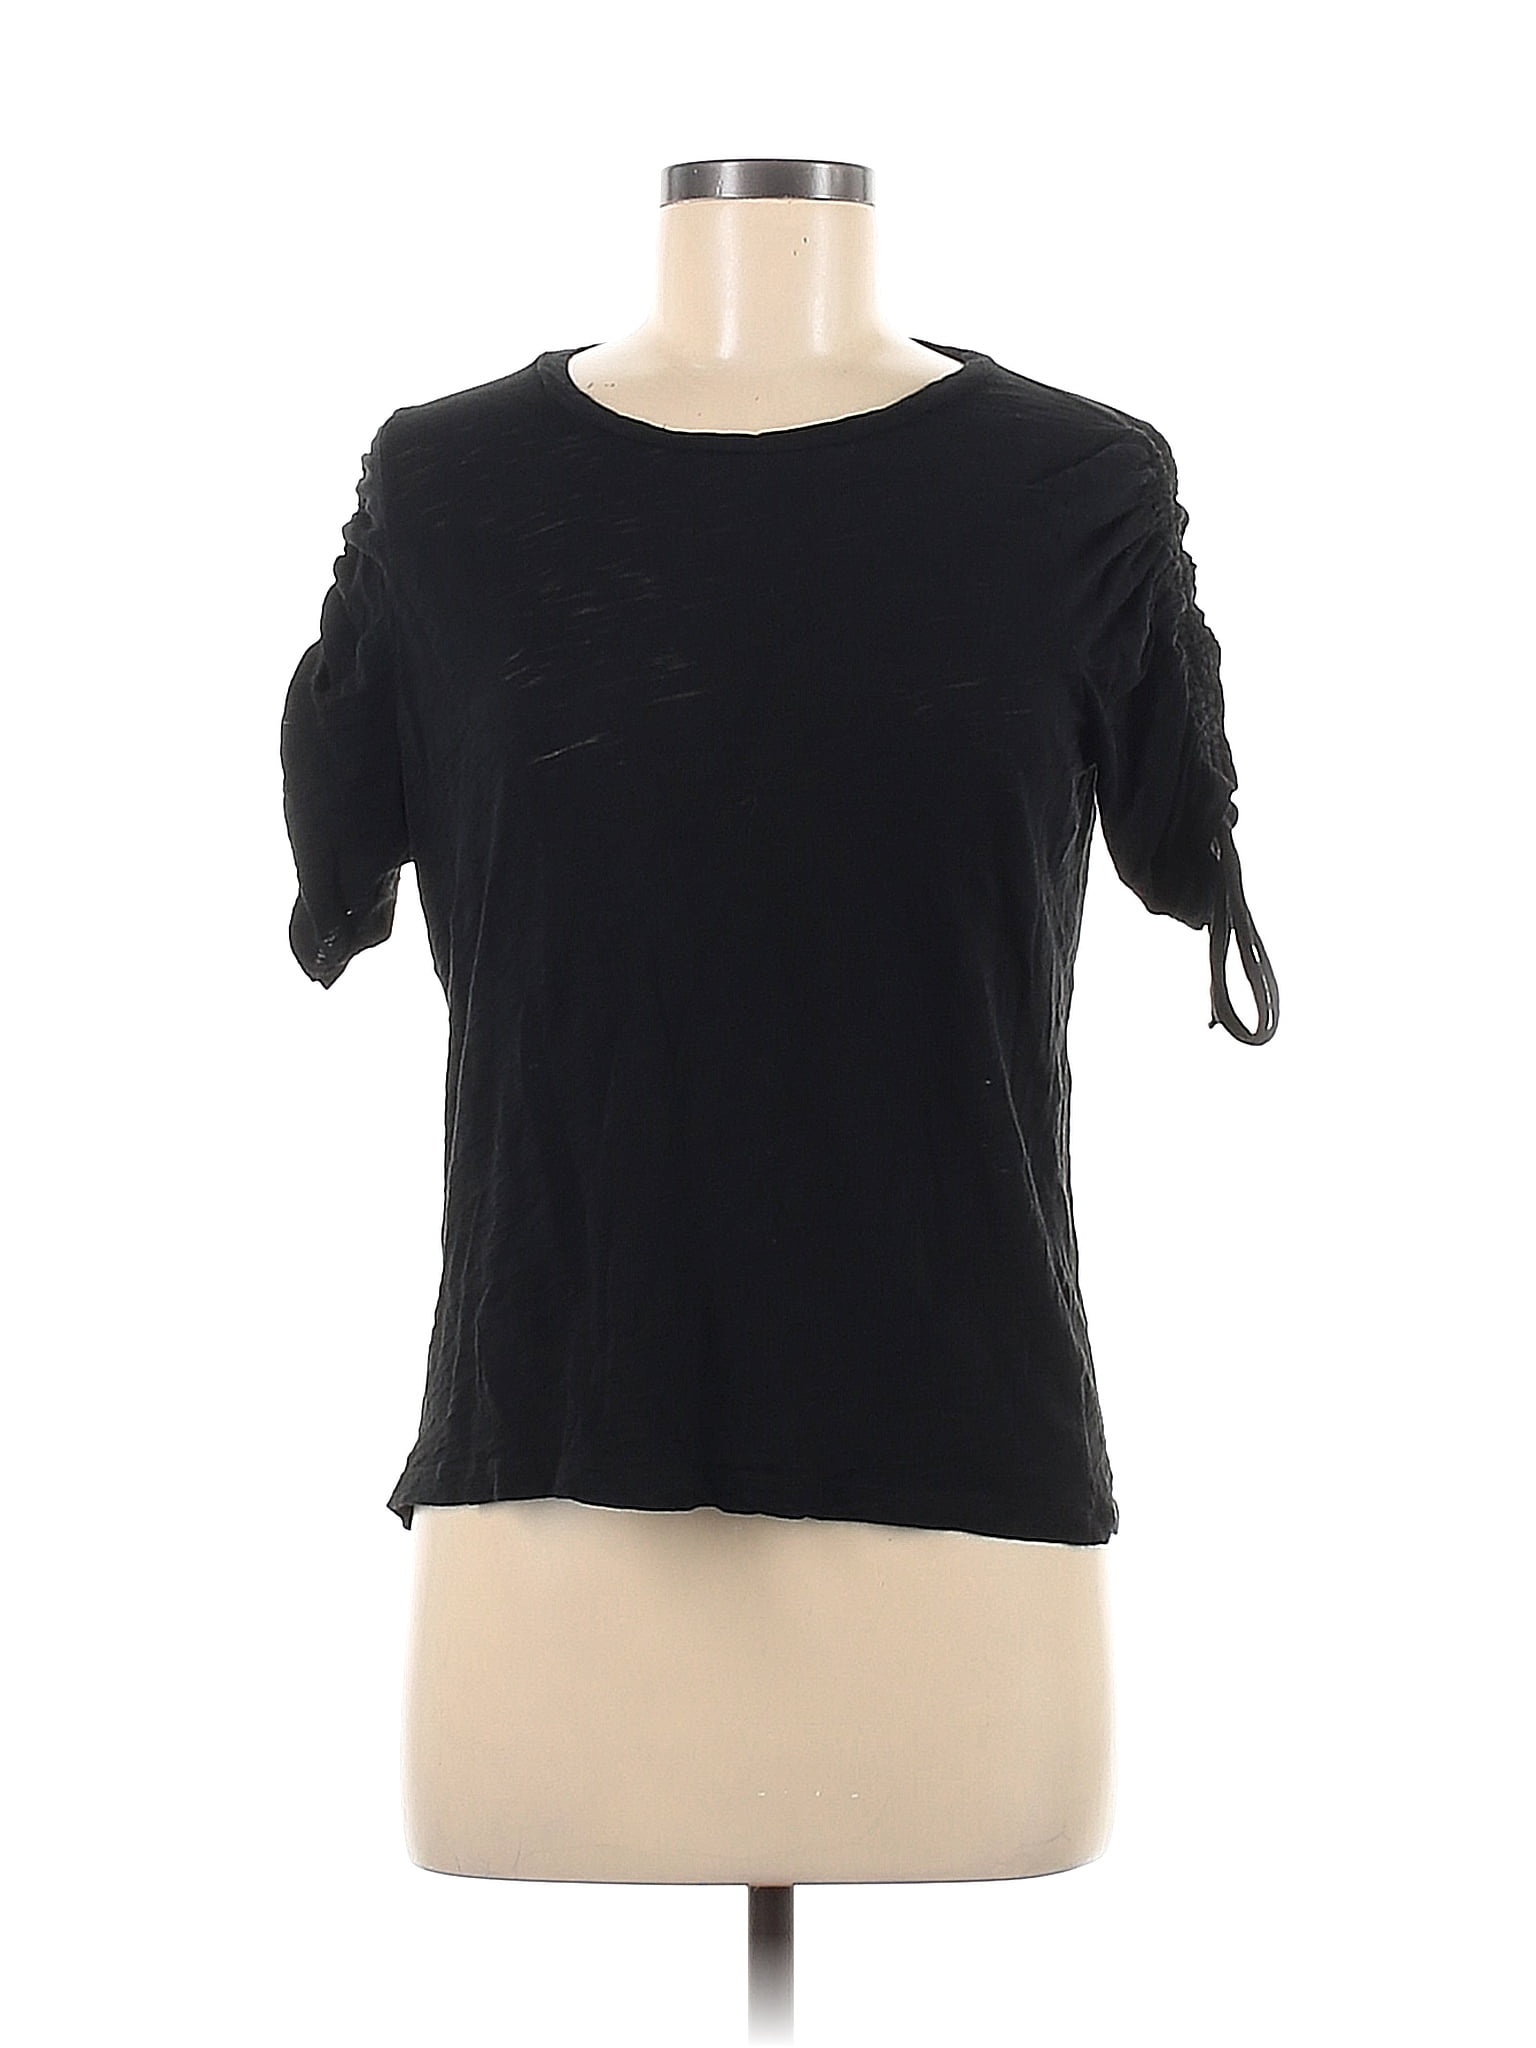 GOLDIE Black Short Sleeve Top Size M - 82% off | thredUP